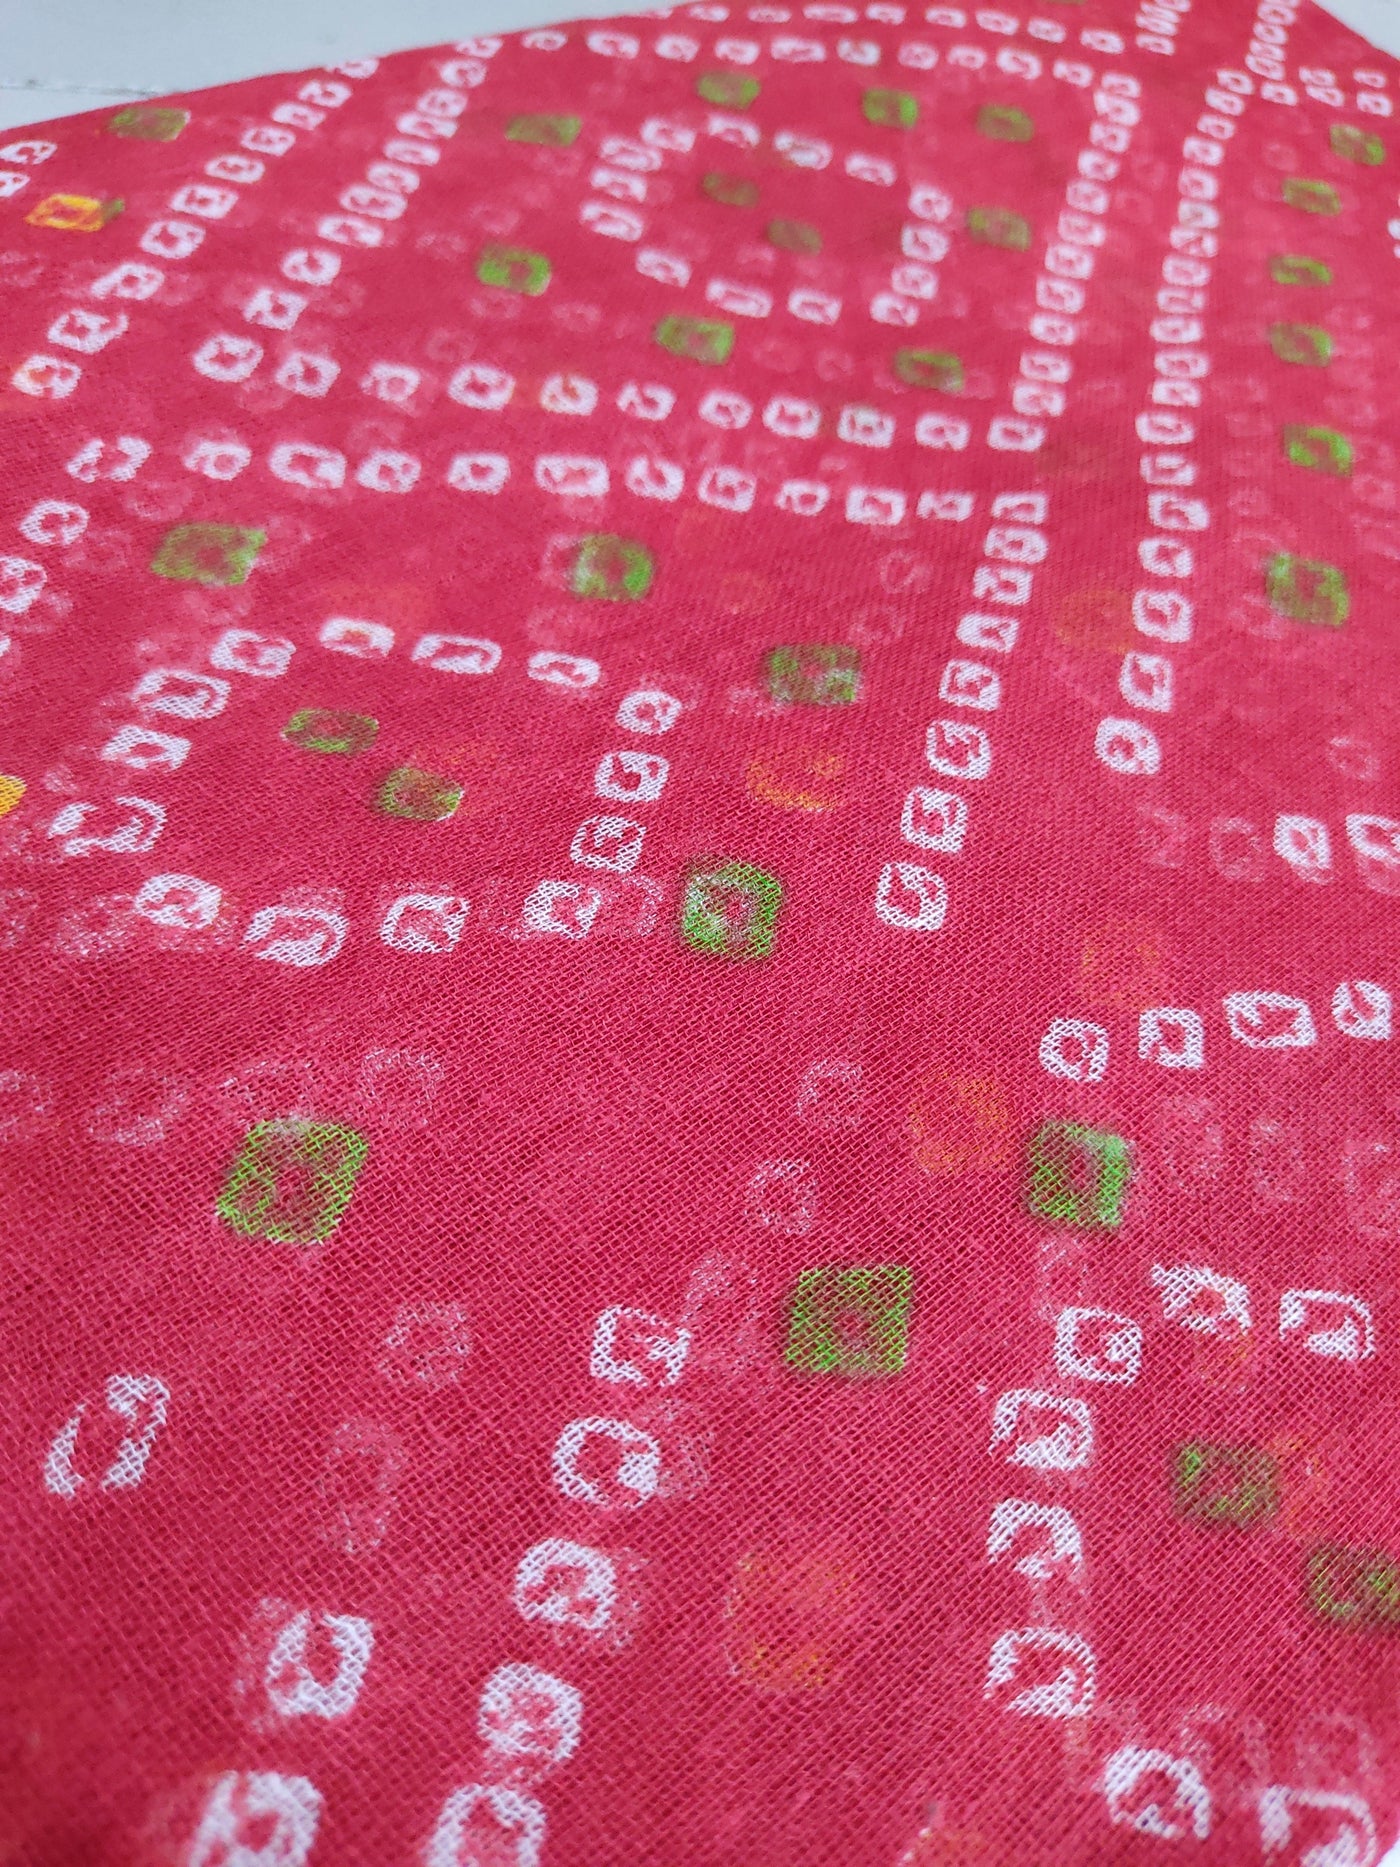 Lamansh Safa cloth LAMANSH® Red Chunri Safa Cloth for Barati's & Guests Welcome | Safa Kapda for Tying Turban's in Rajasthani , Mewari & Indian Weddings (7.28 Metres * 0.65 Metre)